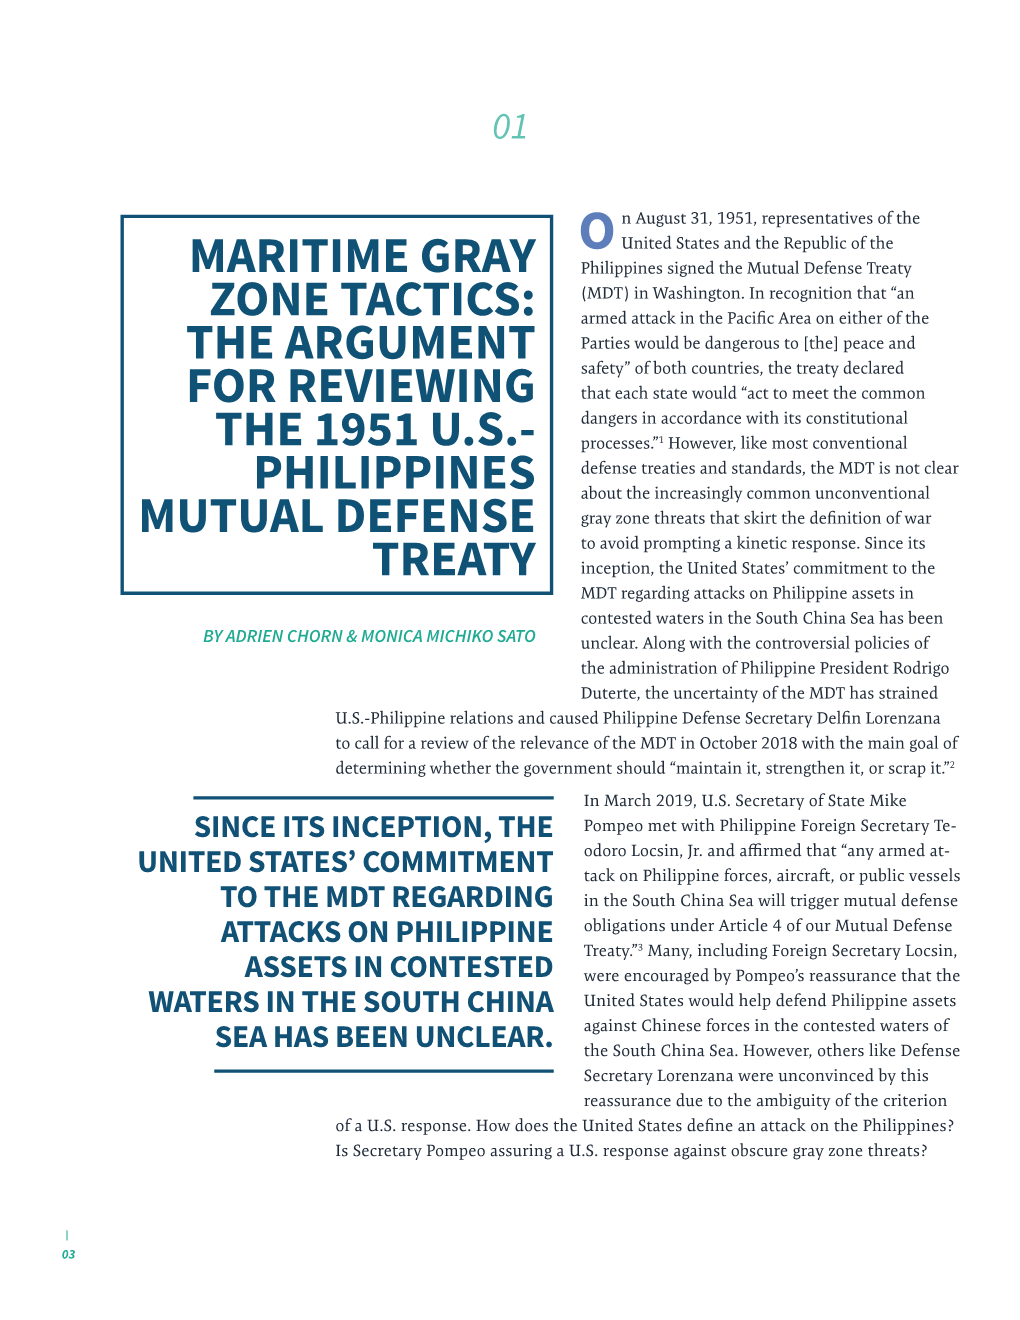 Philippines Mutual Defense Treaty